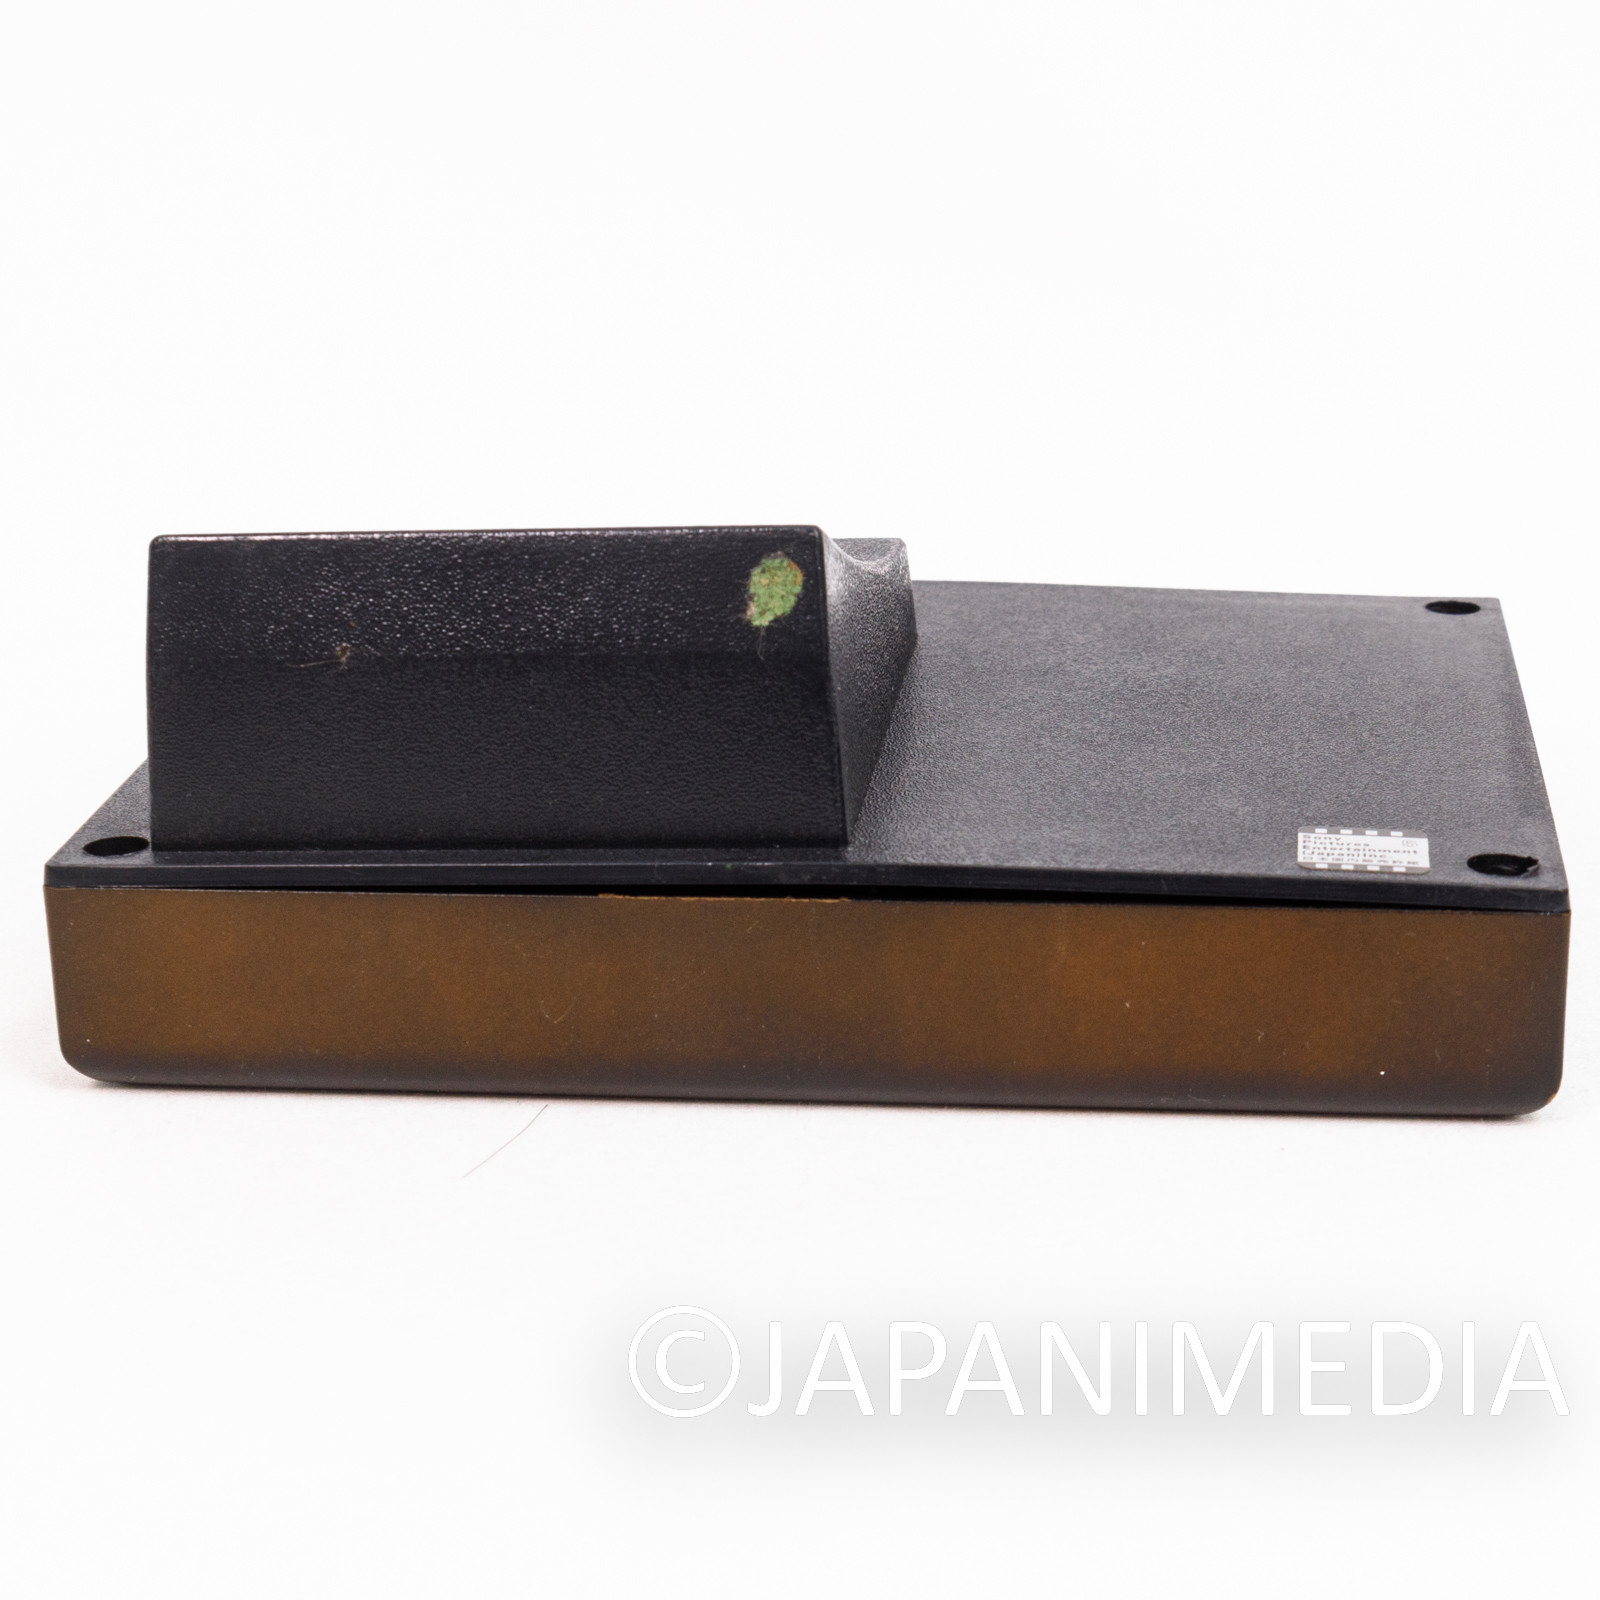 Rurouni Kenshin Music Box "Freckles / Sobakasu" Judy and Mary JAPAN ANIME